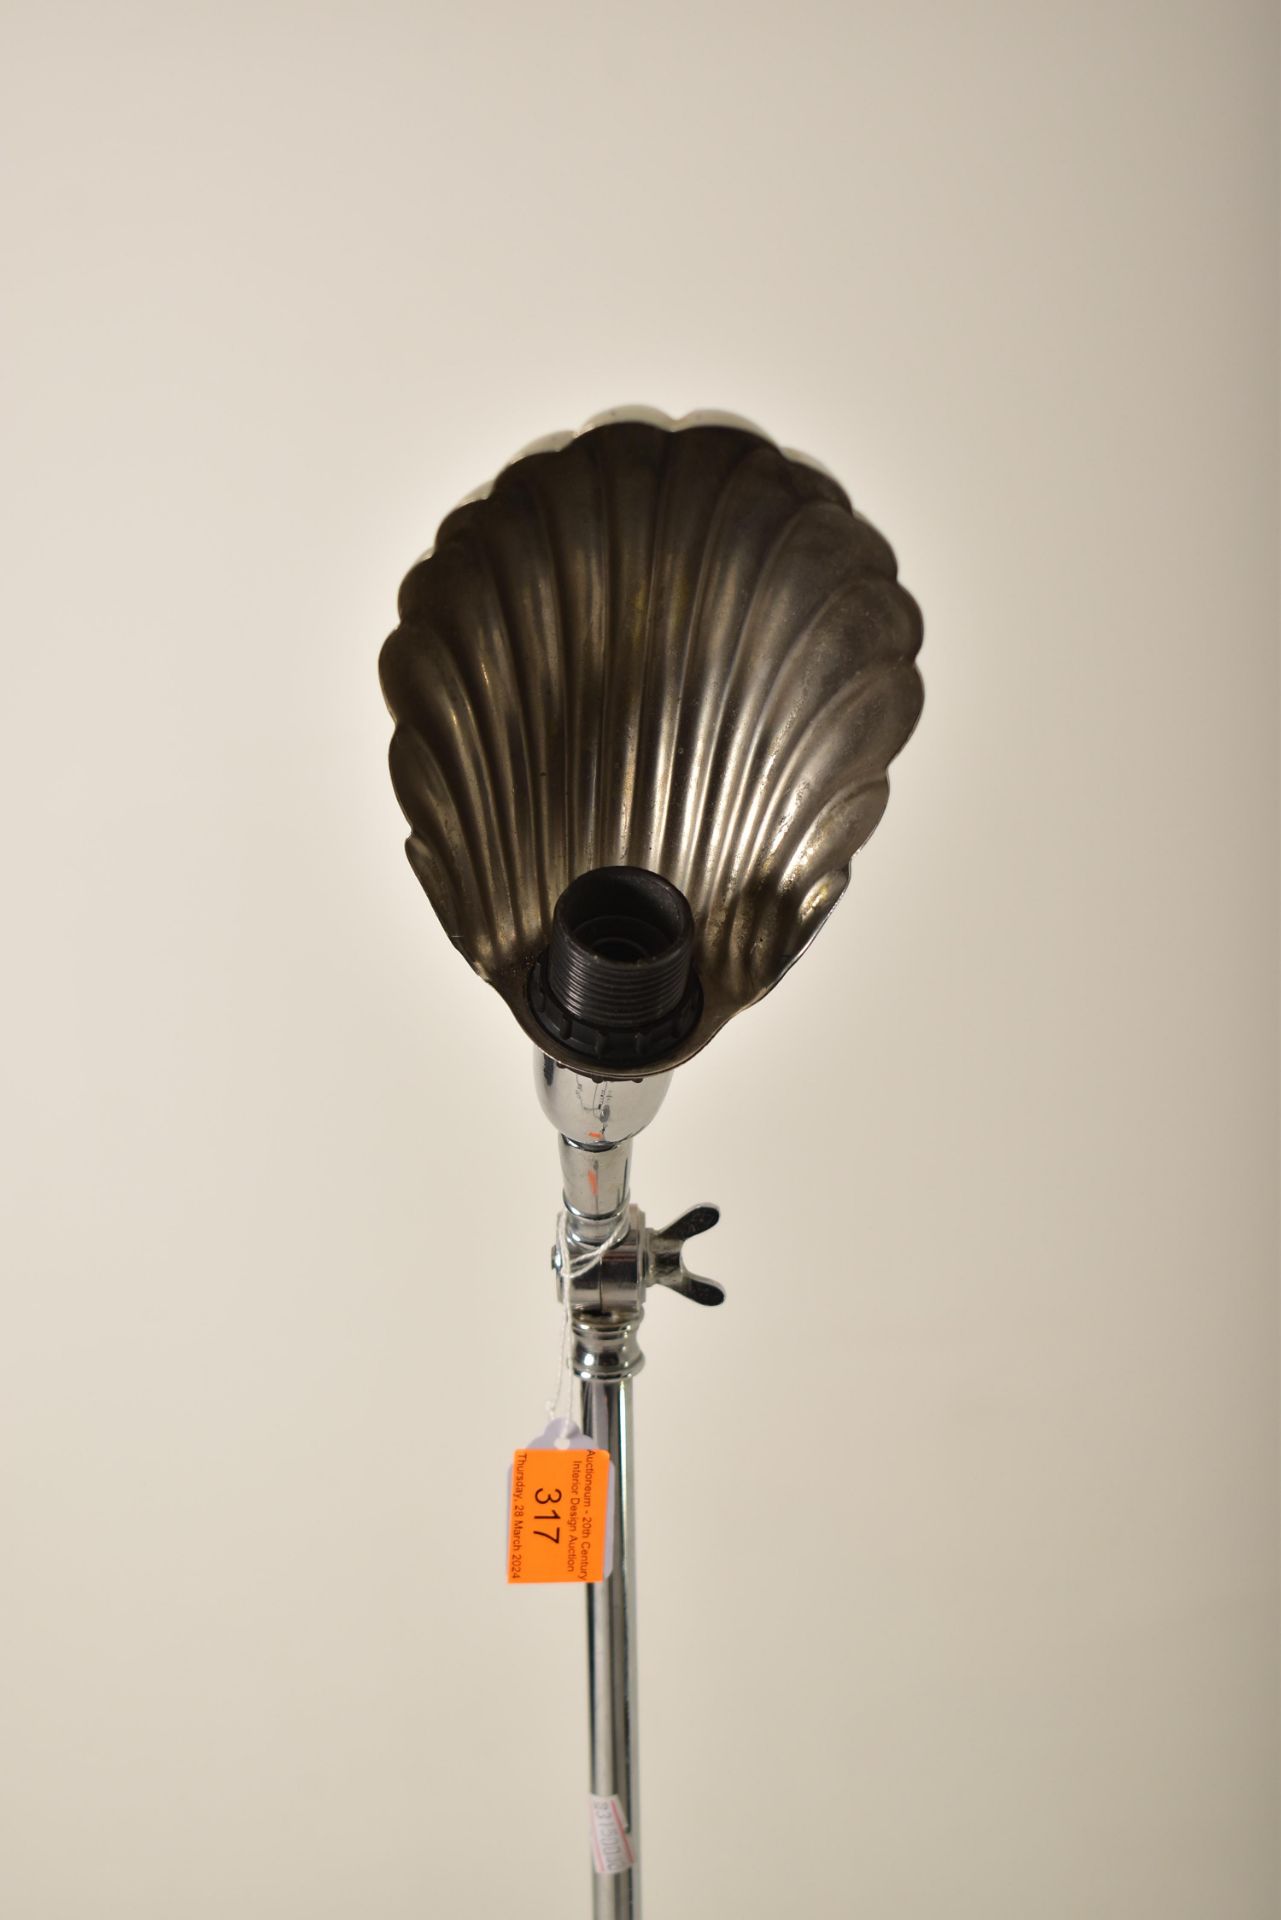 ART DECO STYLE 20TH CENTURY CHROME METAL FLOOR LAMP - Image 4 of 4